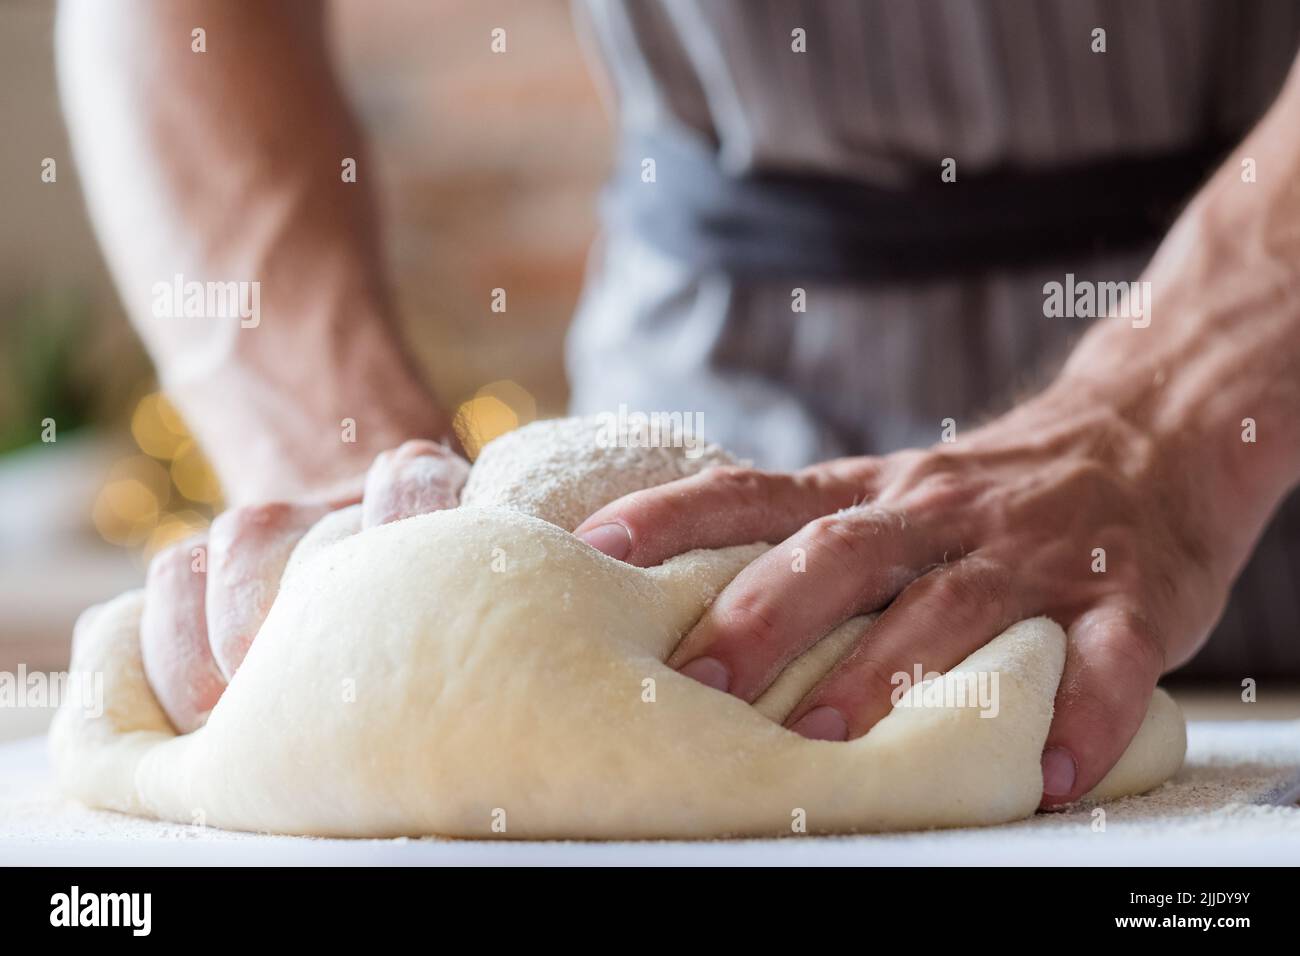 Brotbackrezept Lebensmittel Hände zubereiten Teig kneten Stockfoto